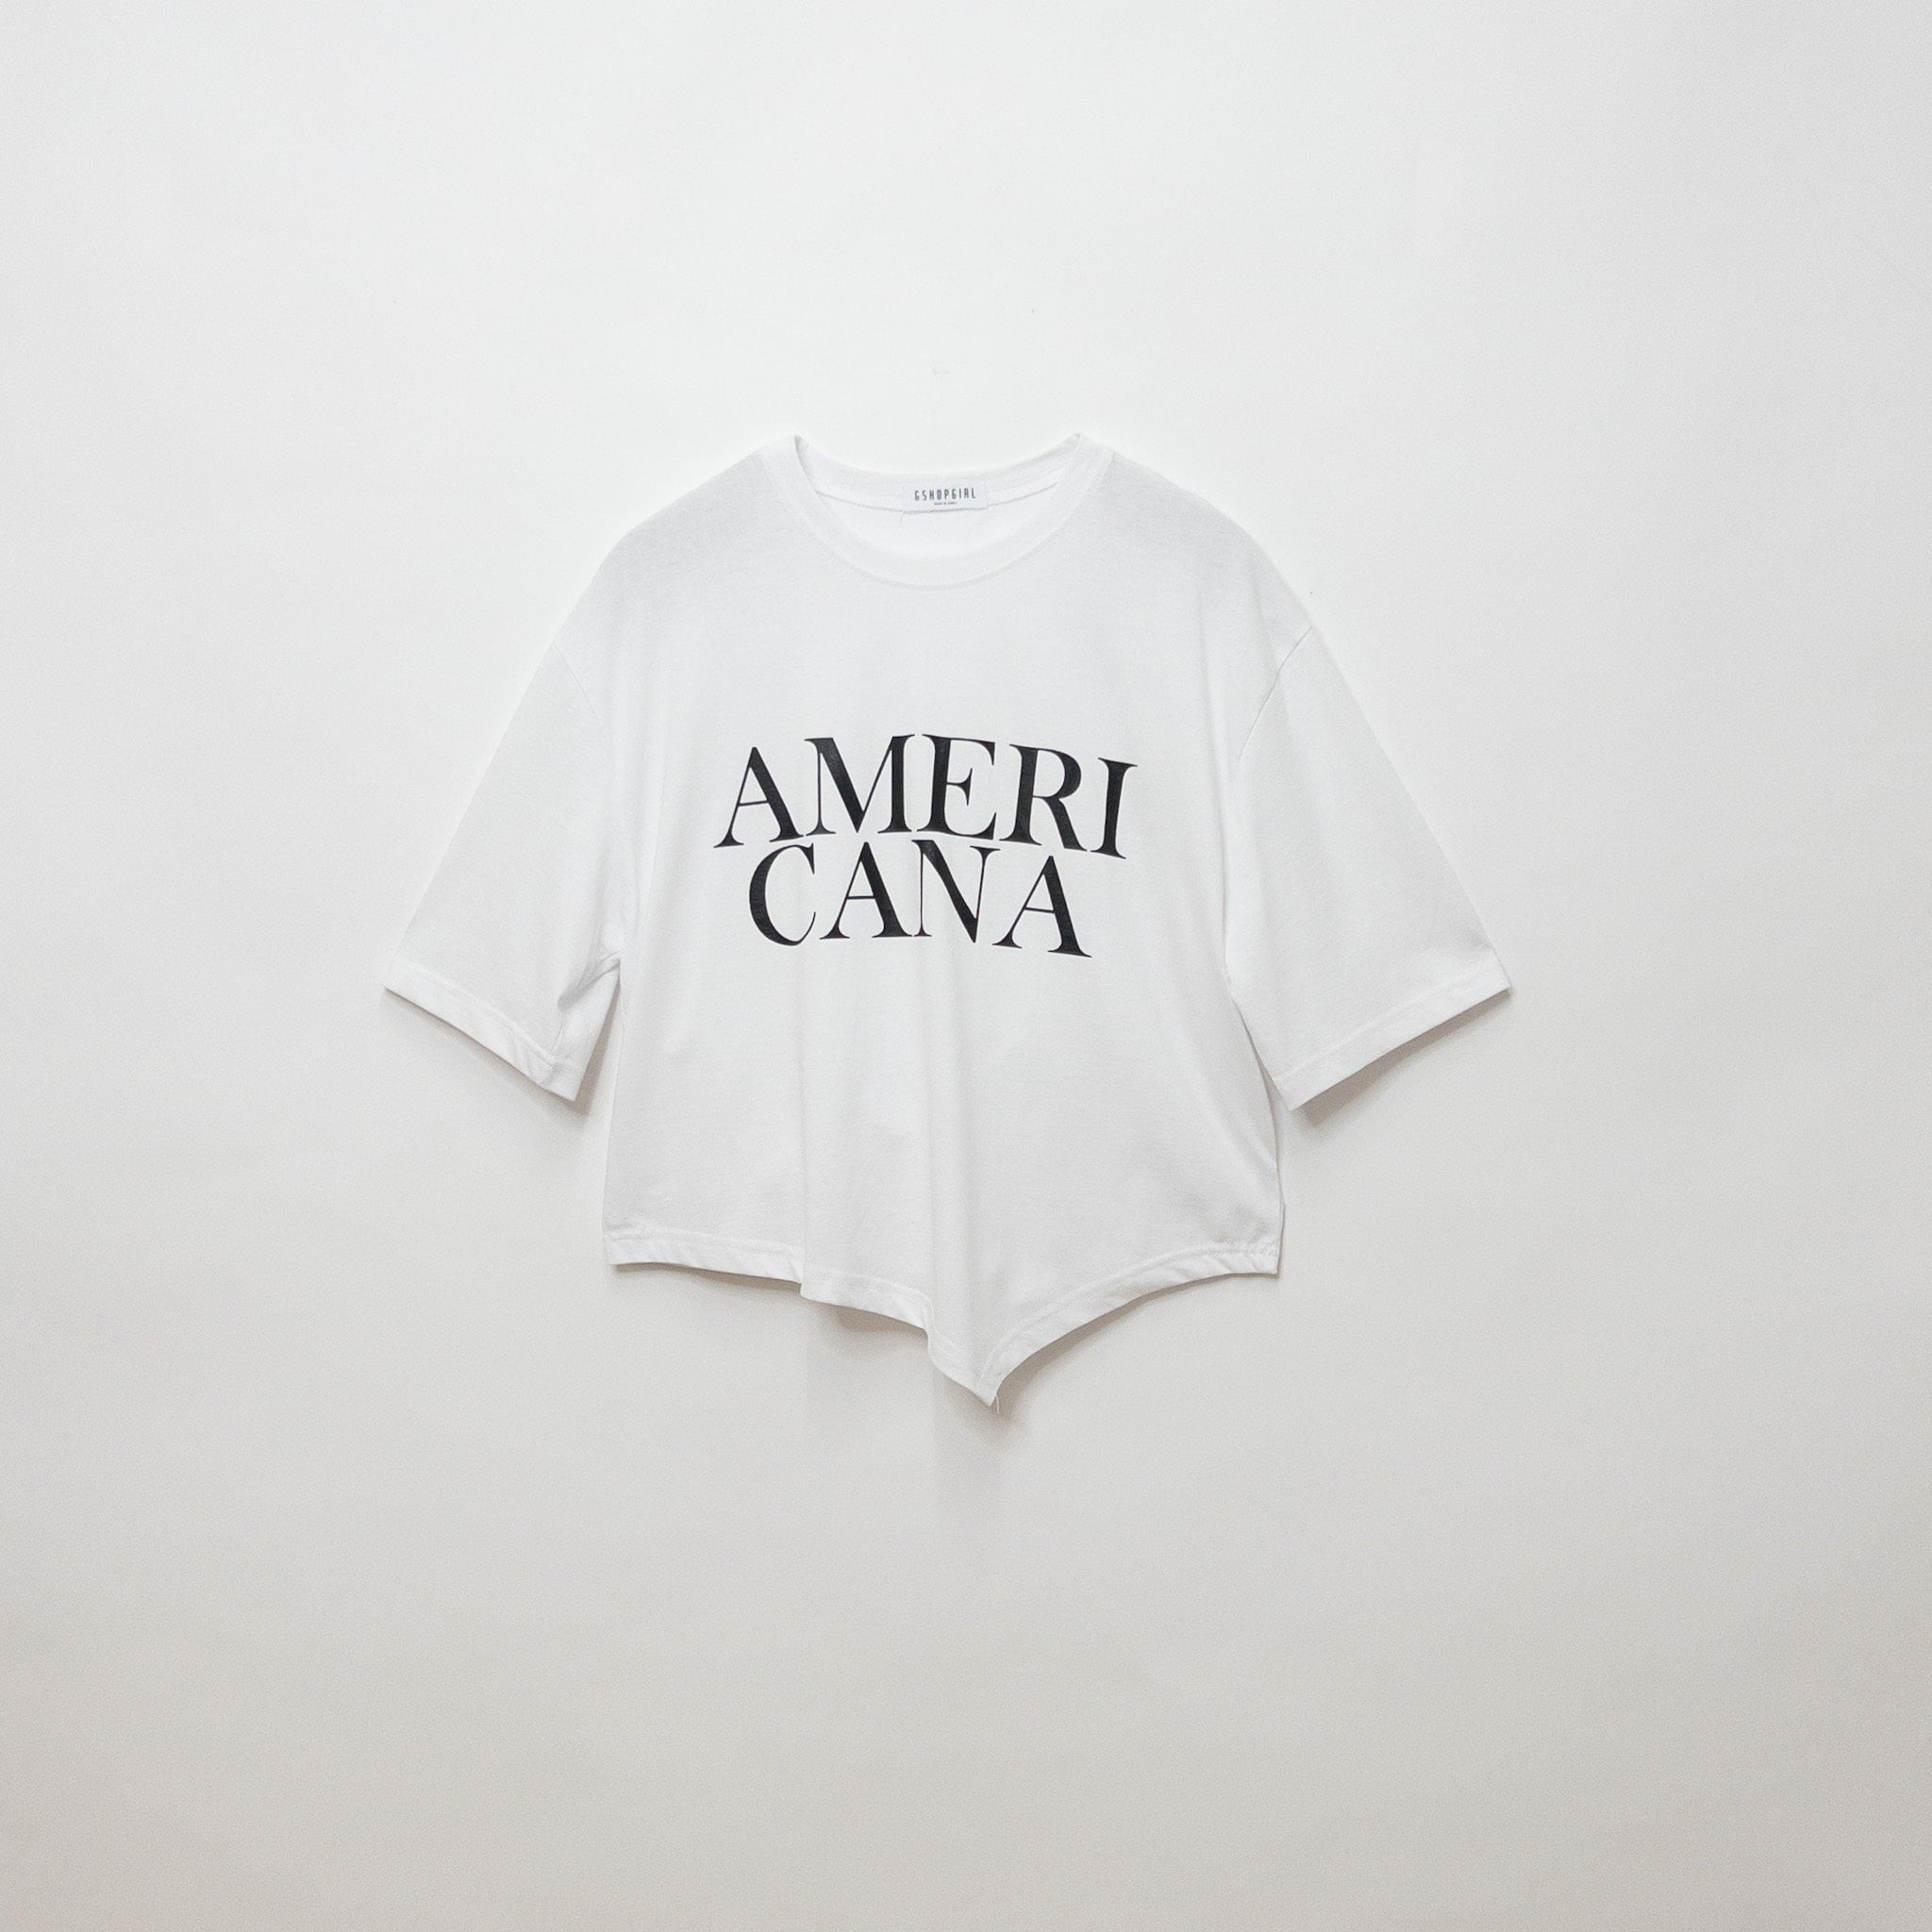 AMERICANAカットTシャツ | ホワイト | ダンスウェア